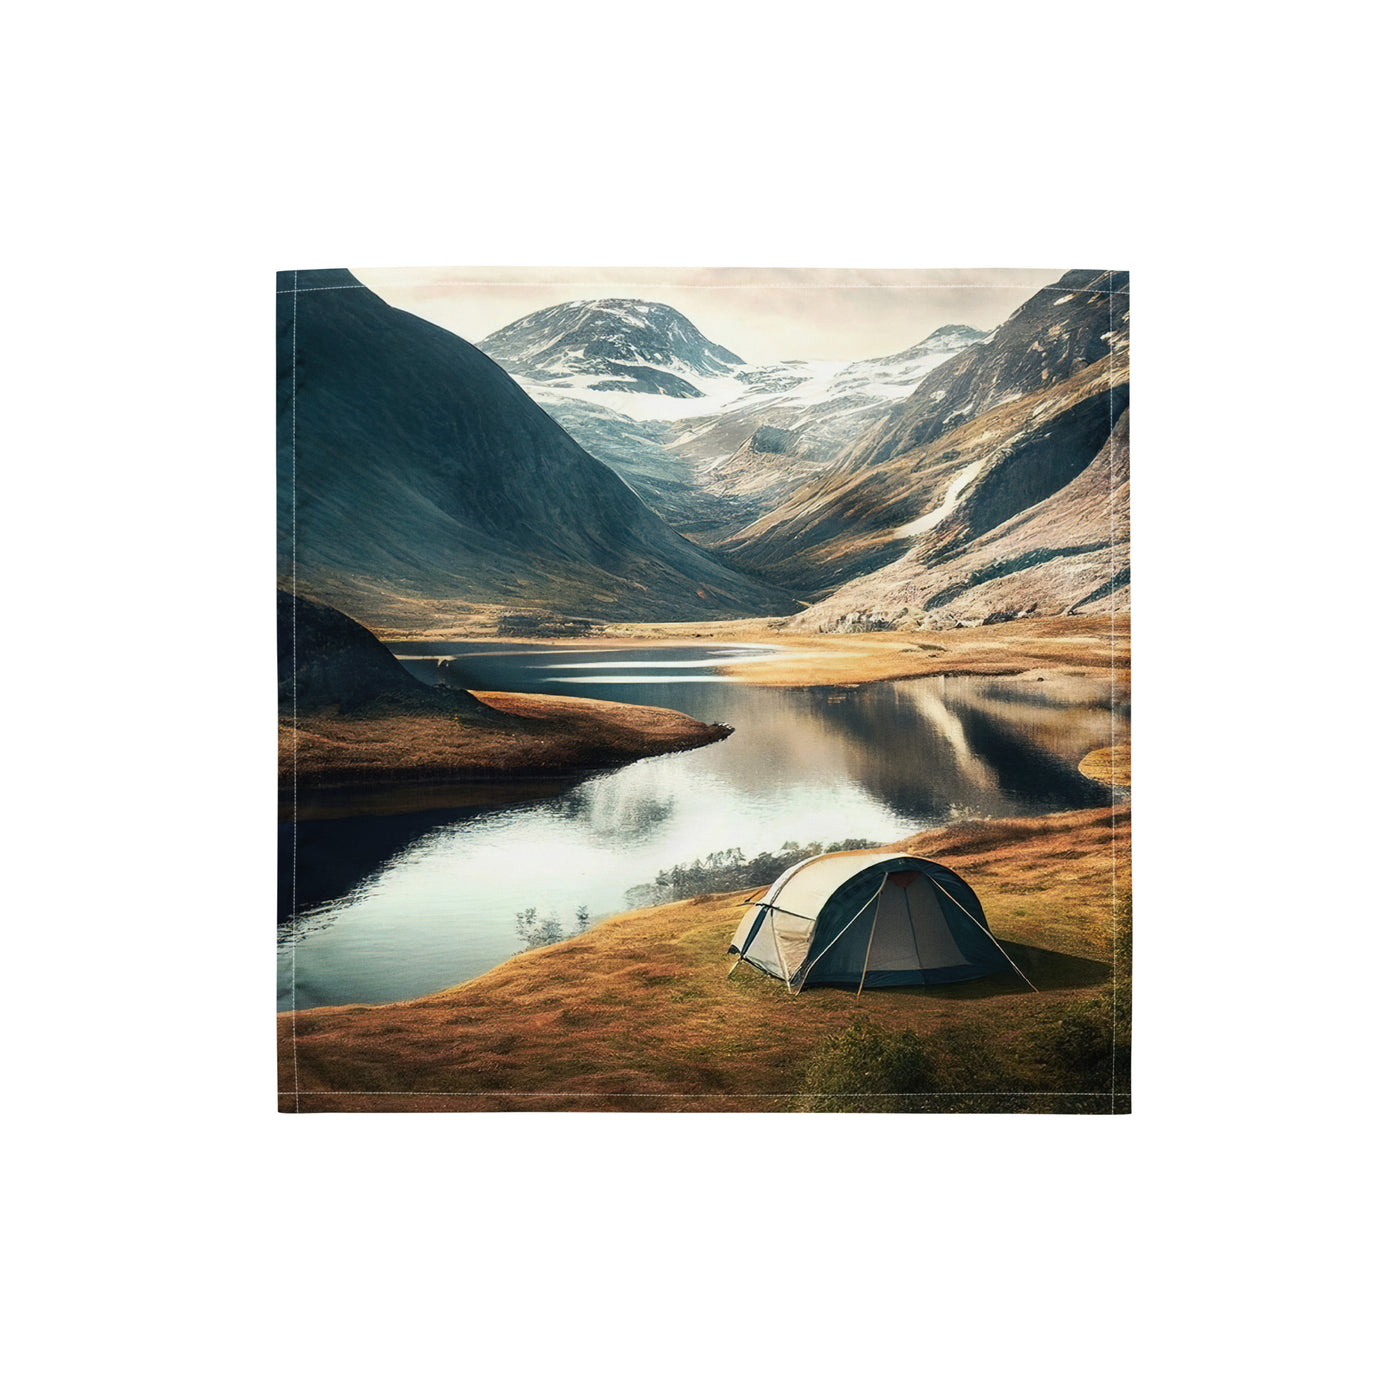 Zelt, Berge und Bergsee - Bandana (All-Over Print) camping xxx S